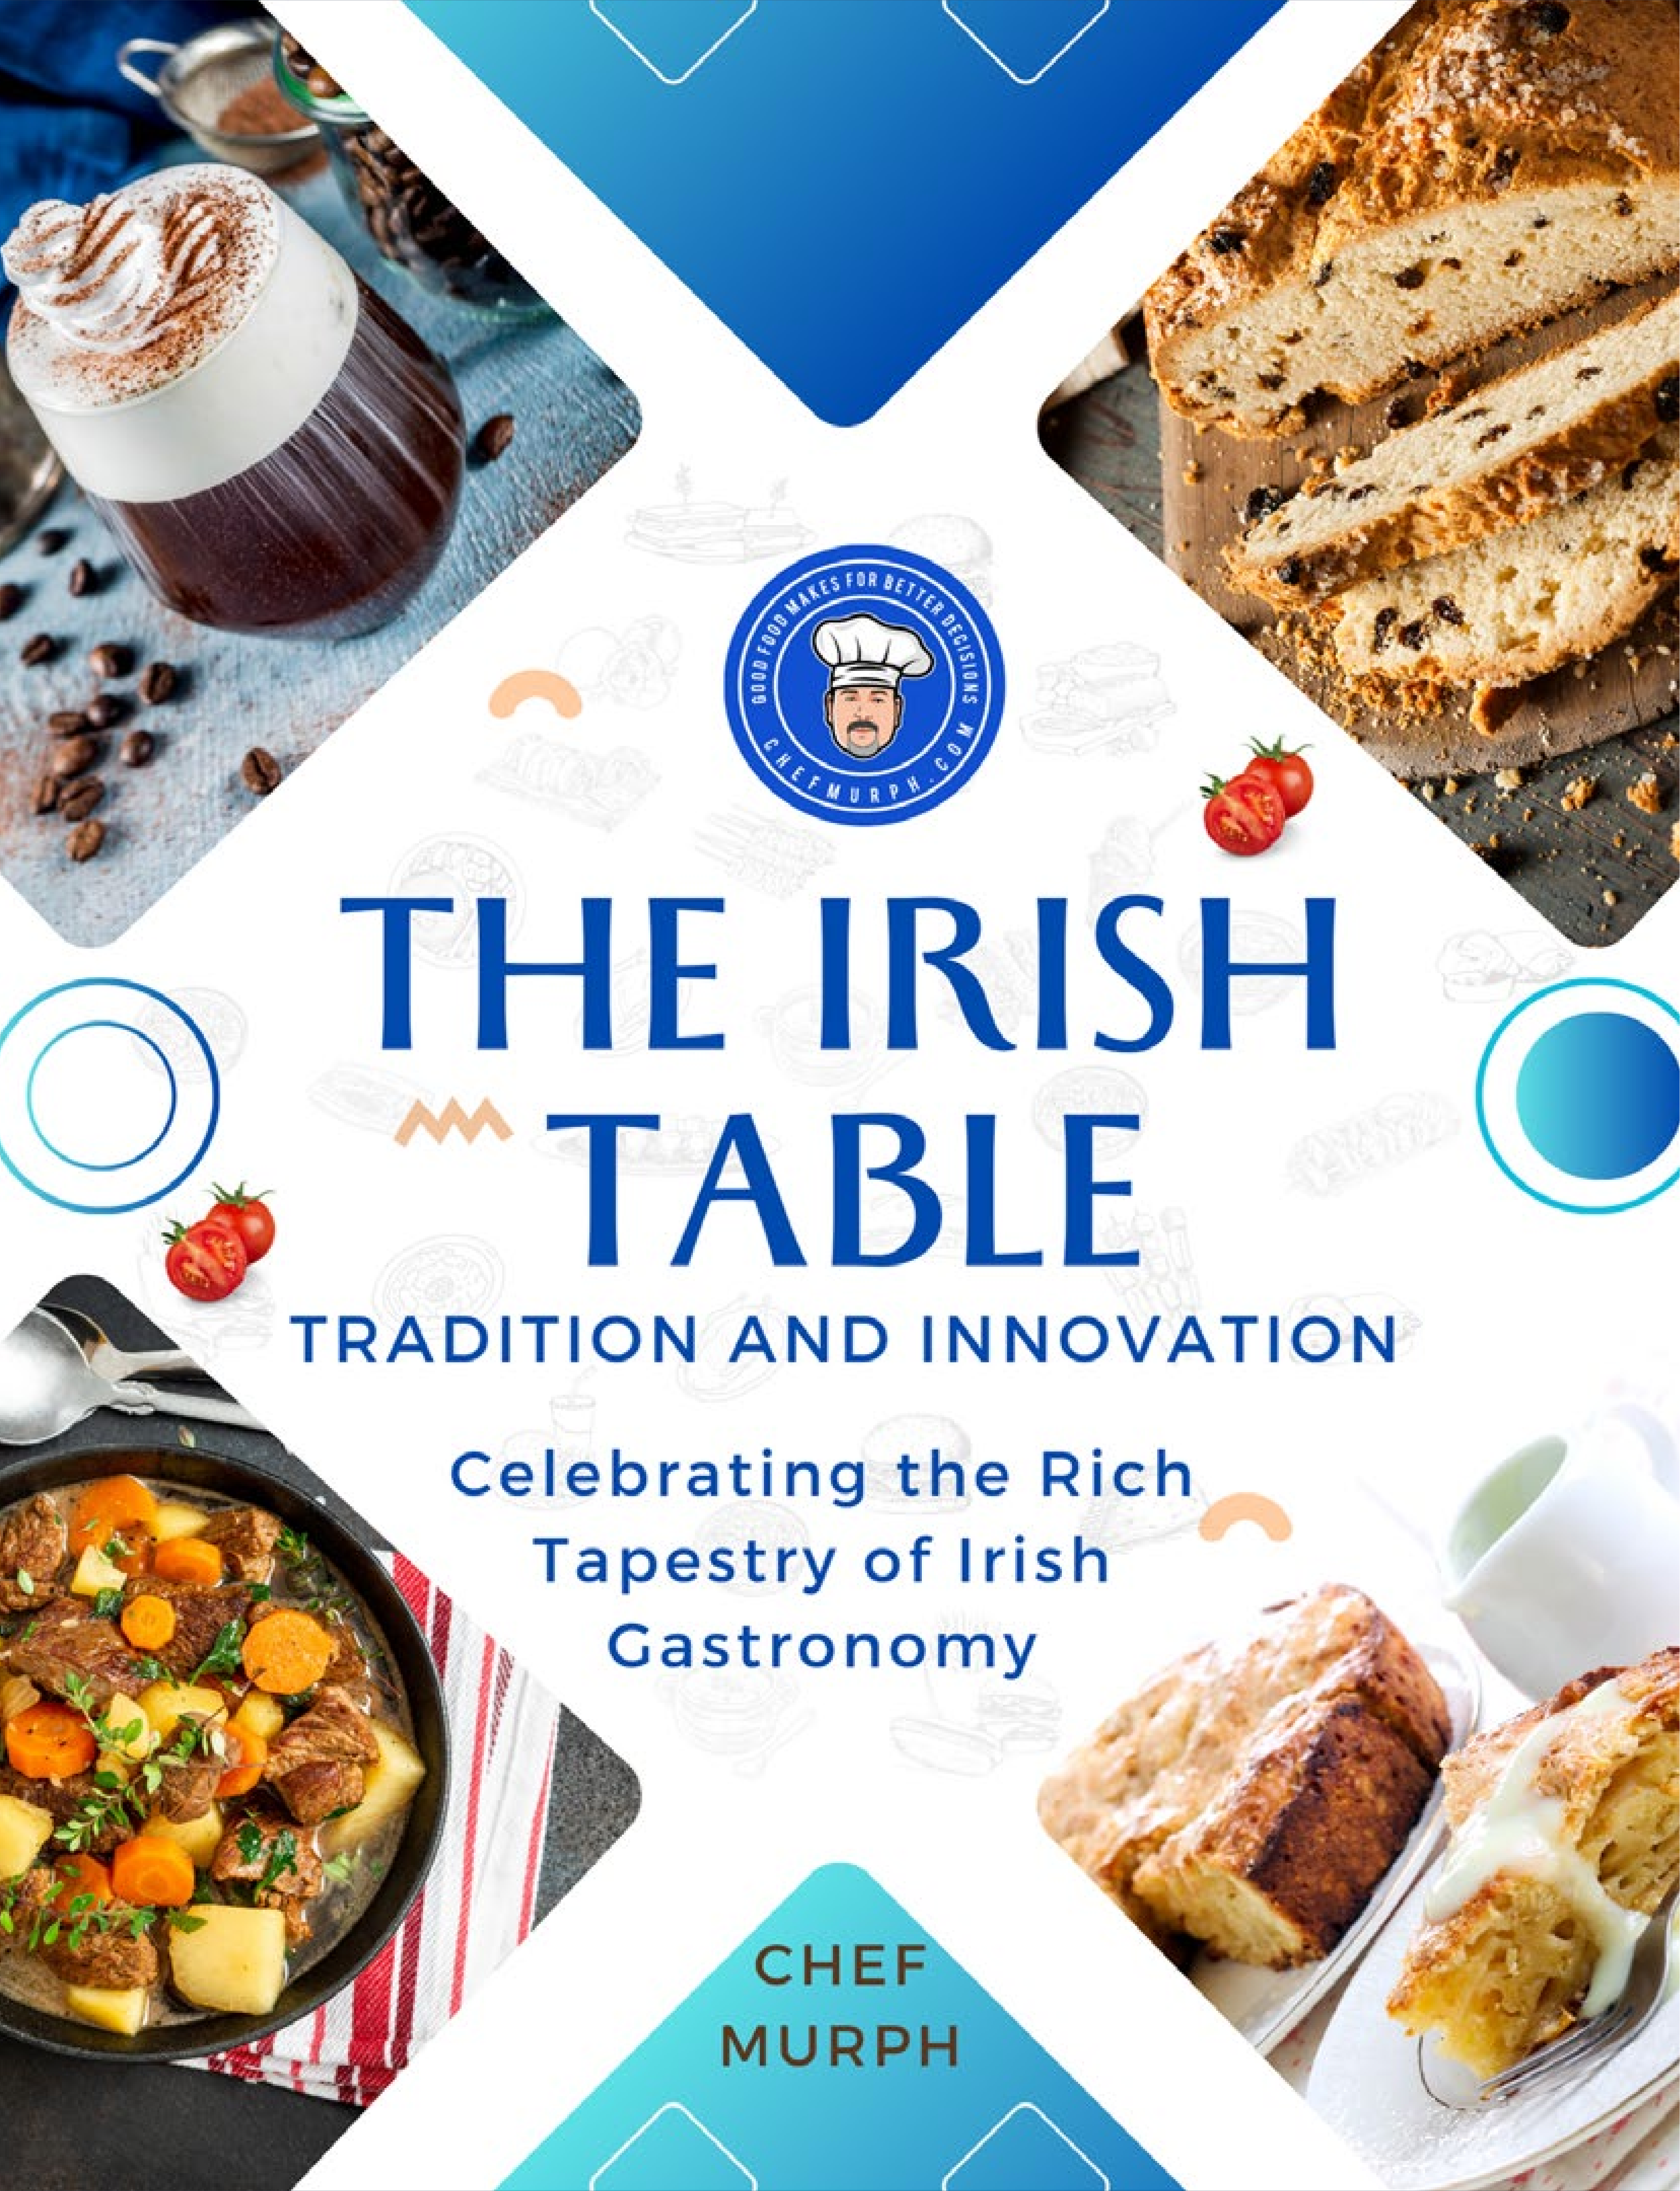 The Irish Table